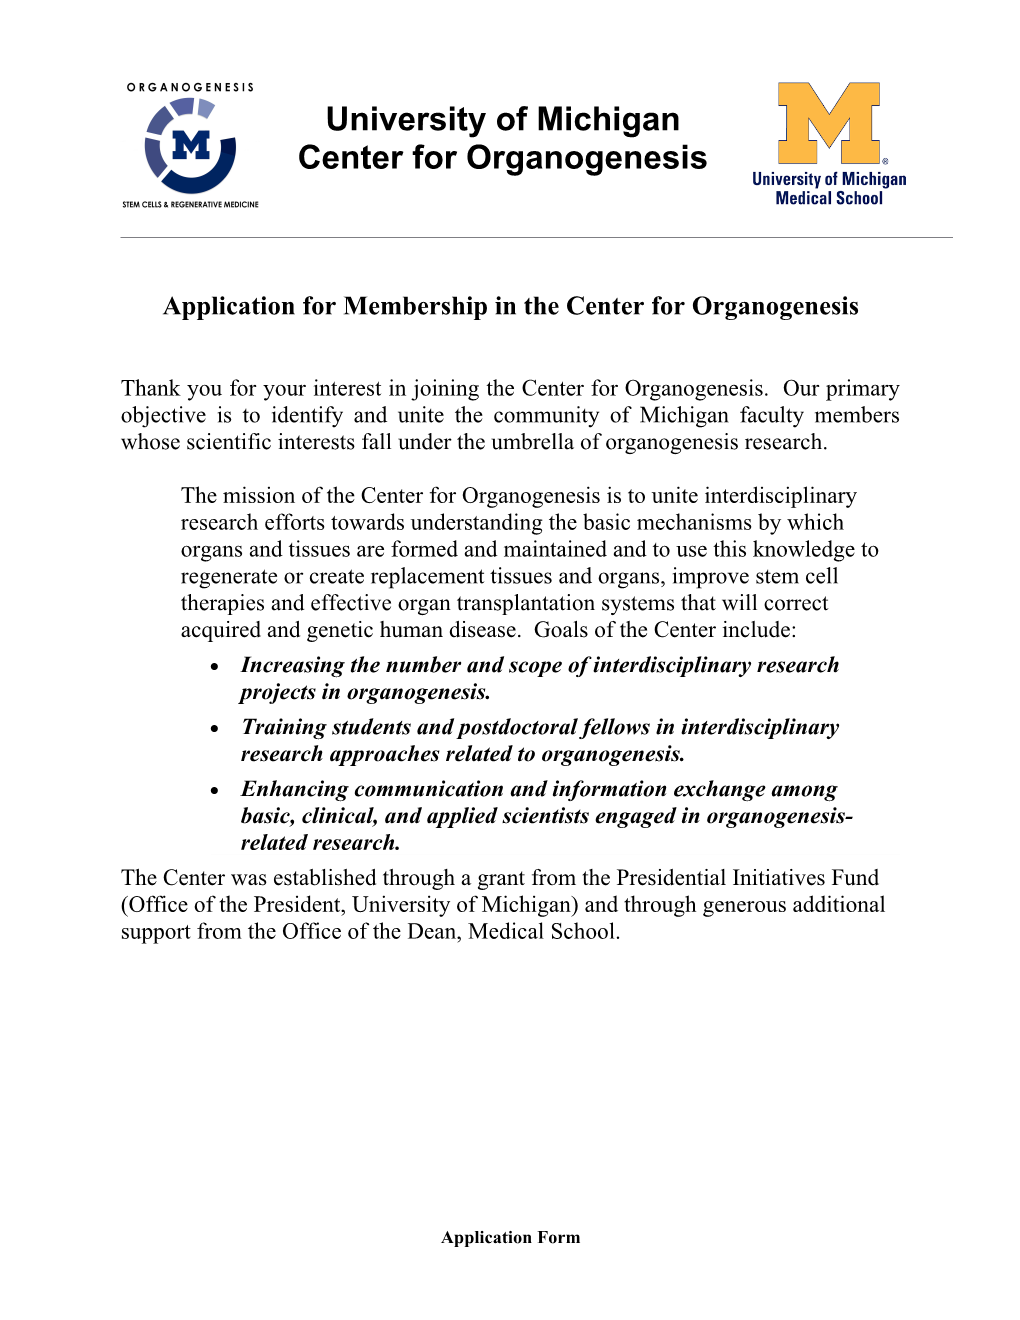 Application for Membership in the Center for Organogenesis